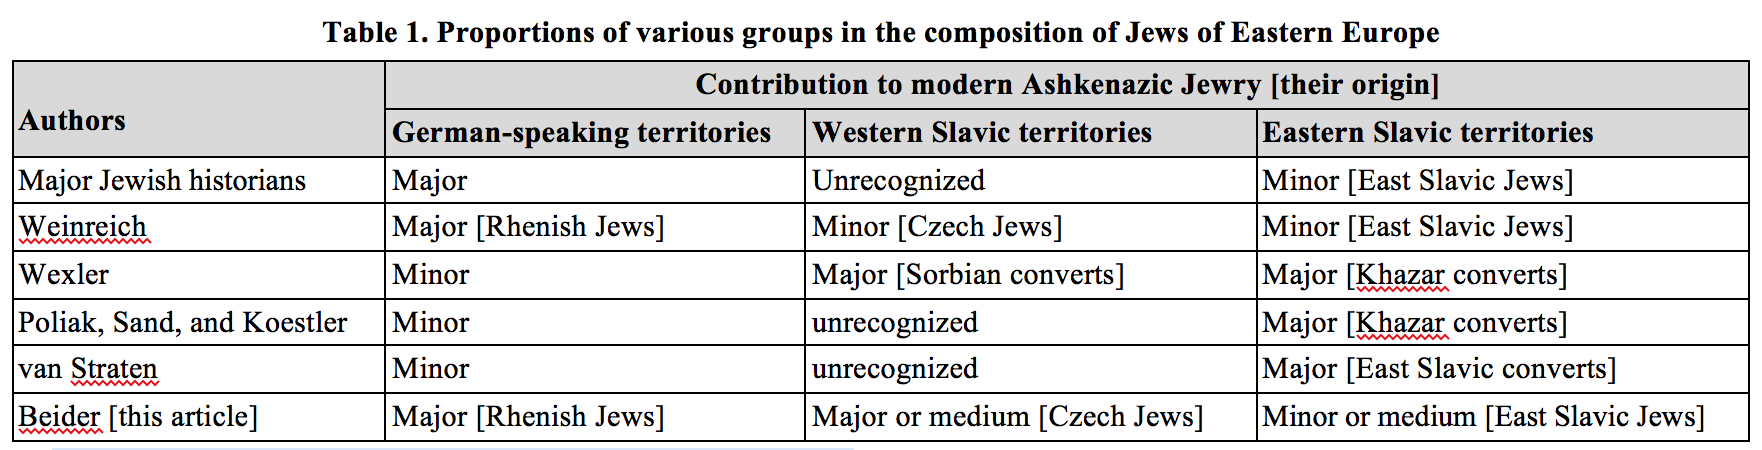 modern eastern european jews